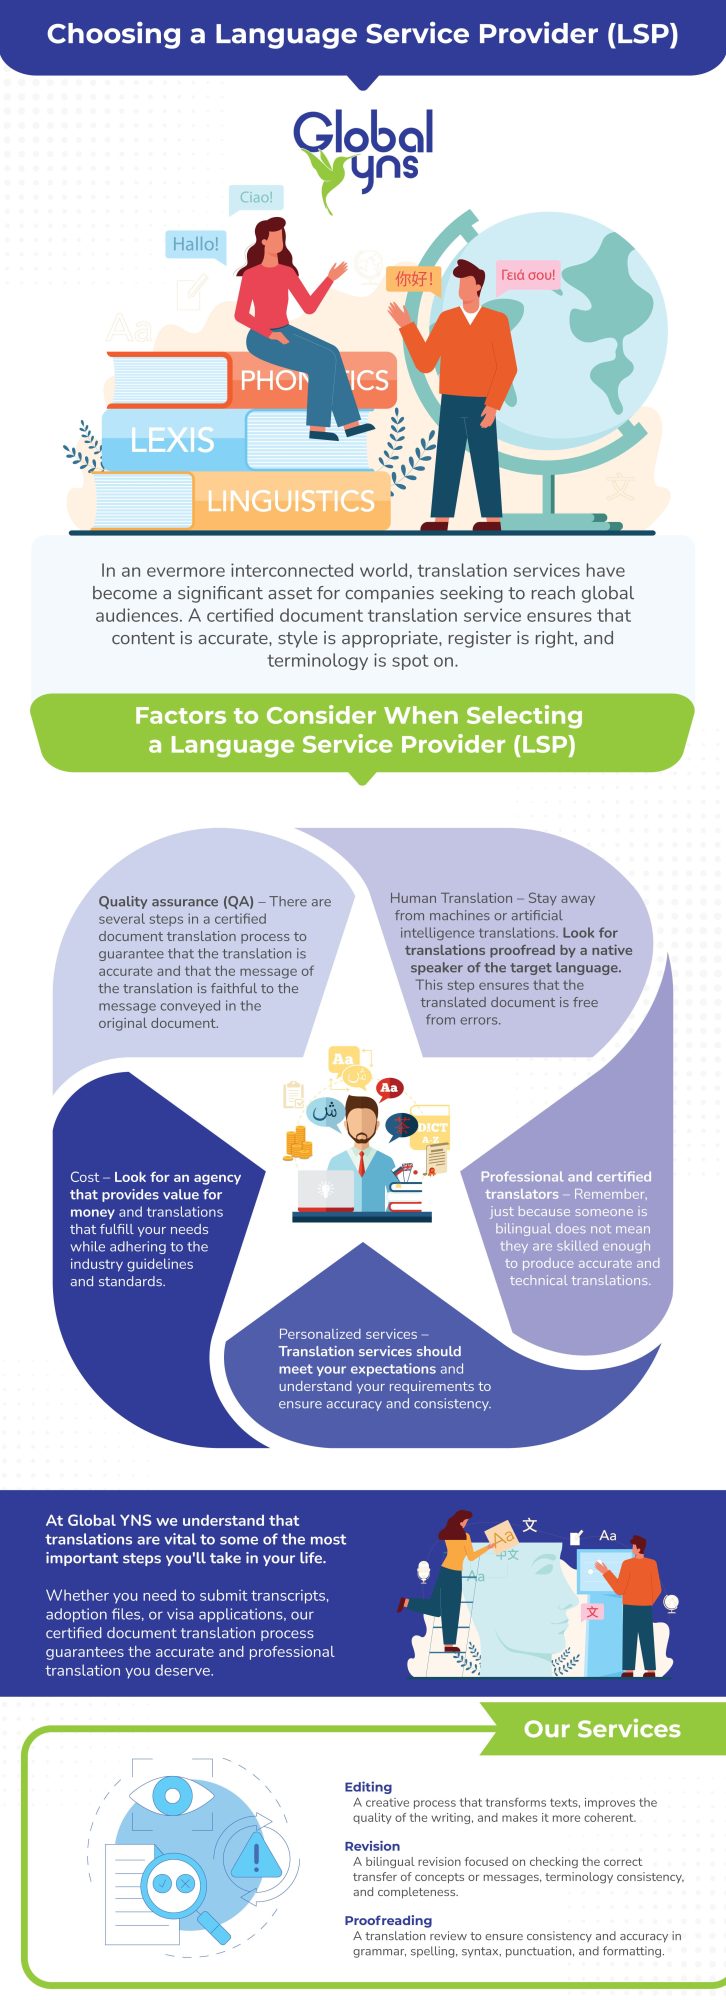 Choosing a Language Service Provider (LSP)